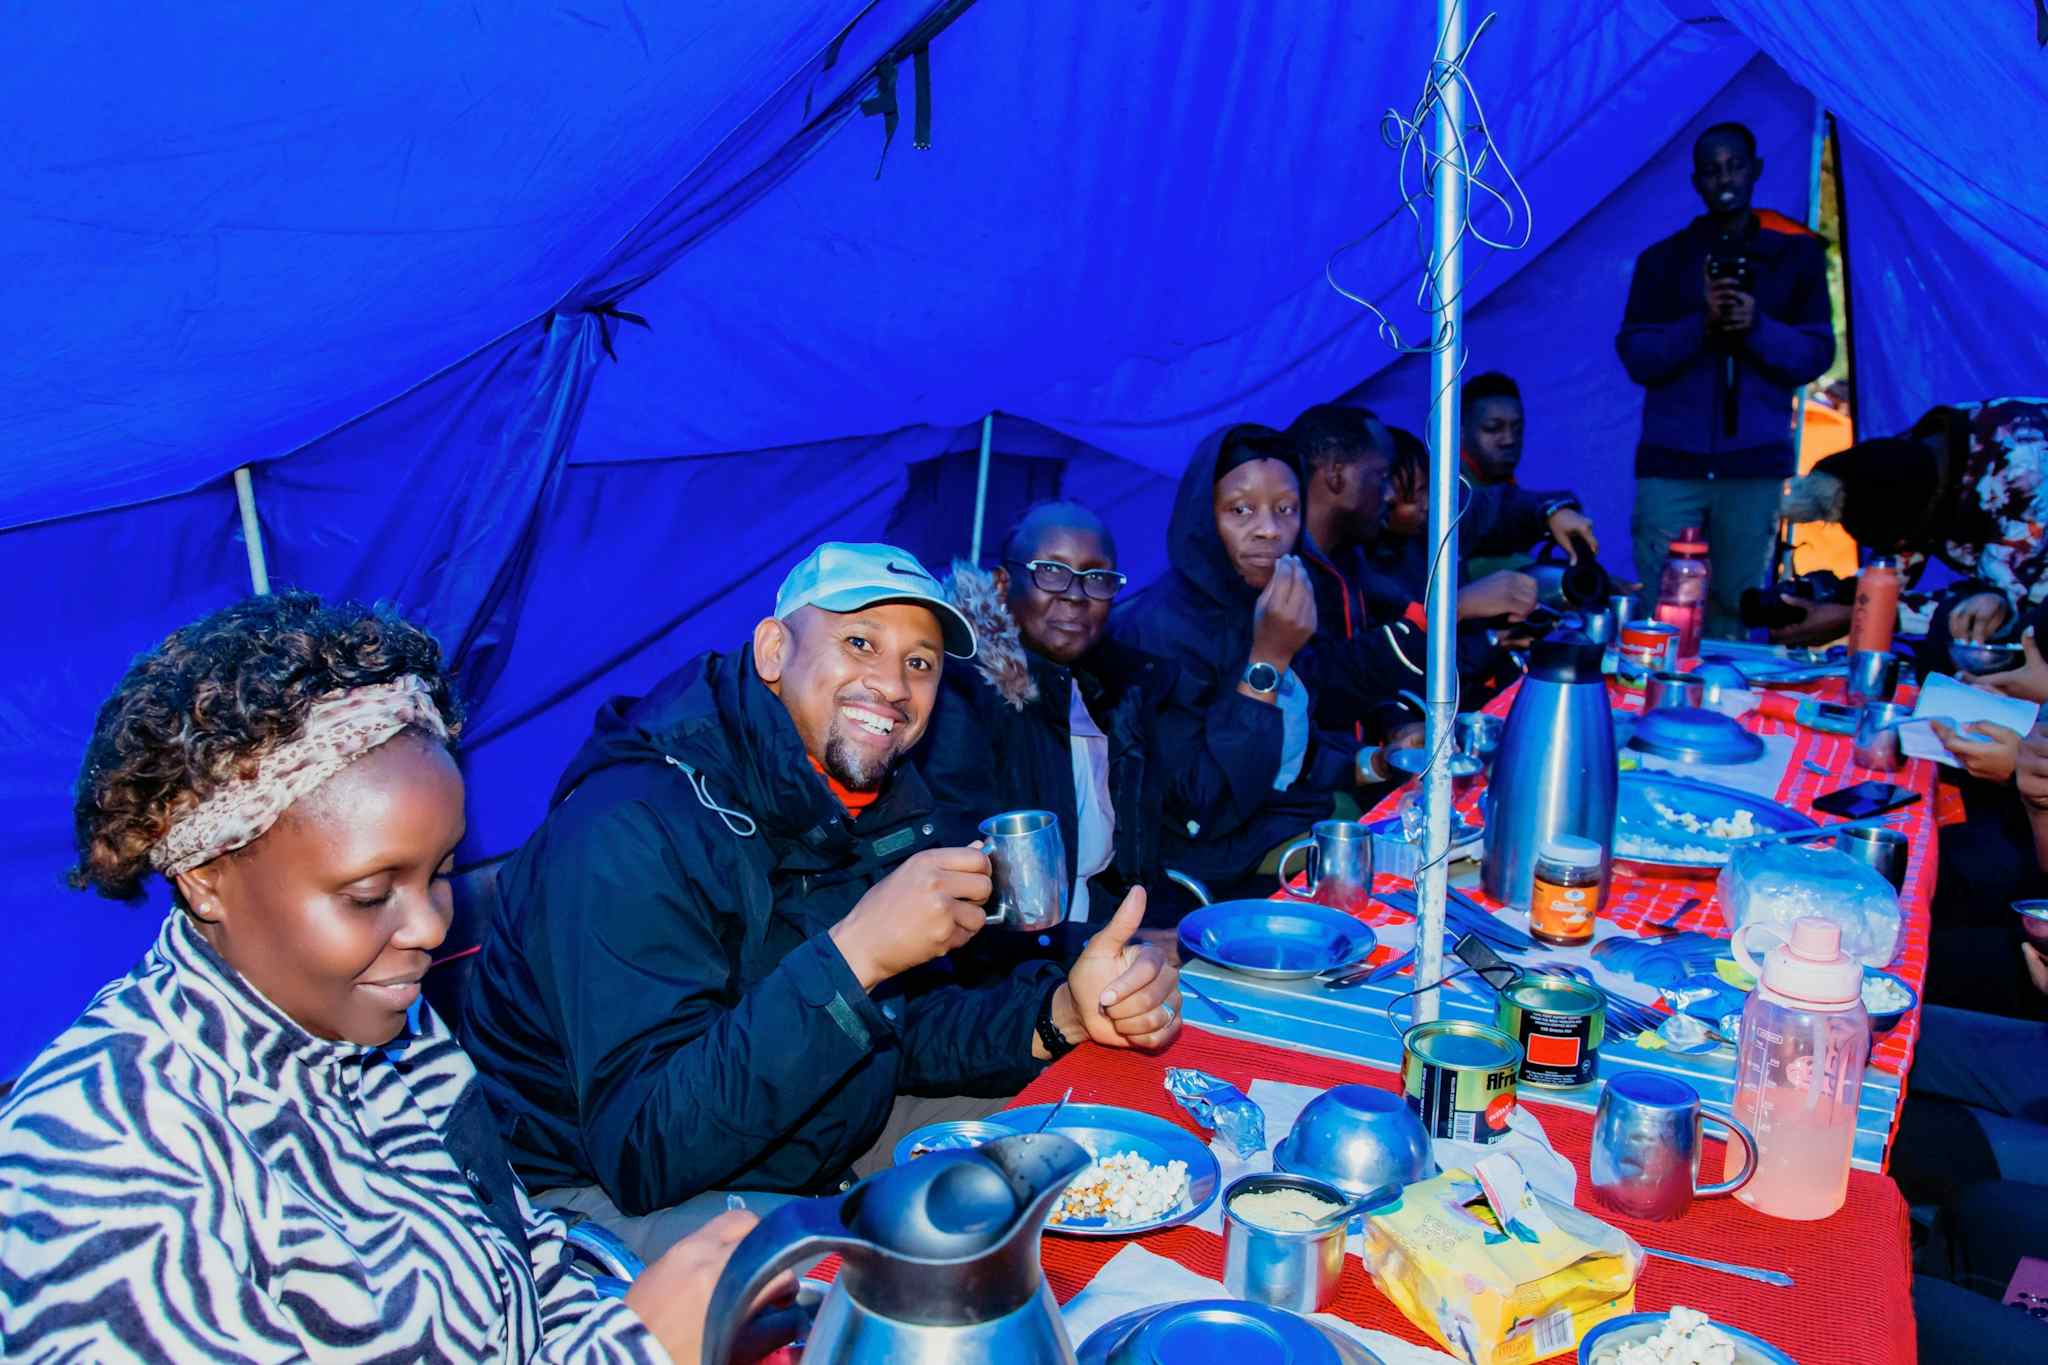 People enjoying a meal in a mess tent on Mount Kilimanjaro, Tanzania.